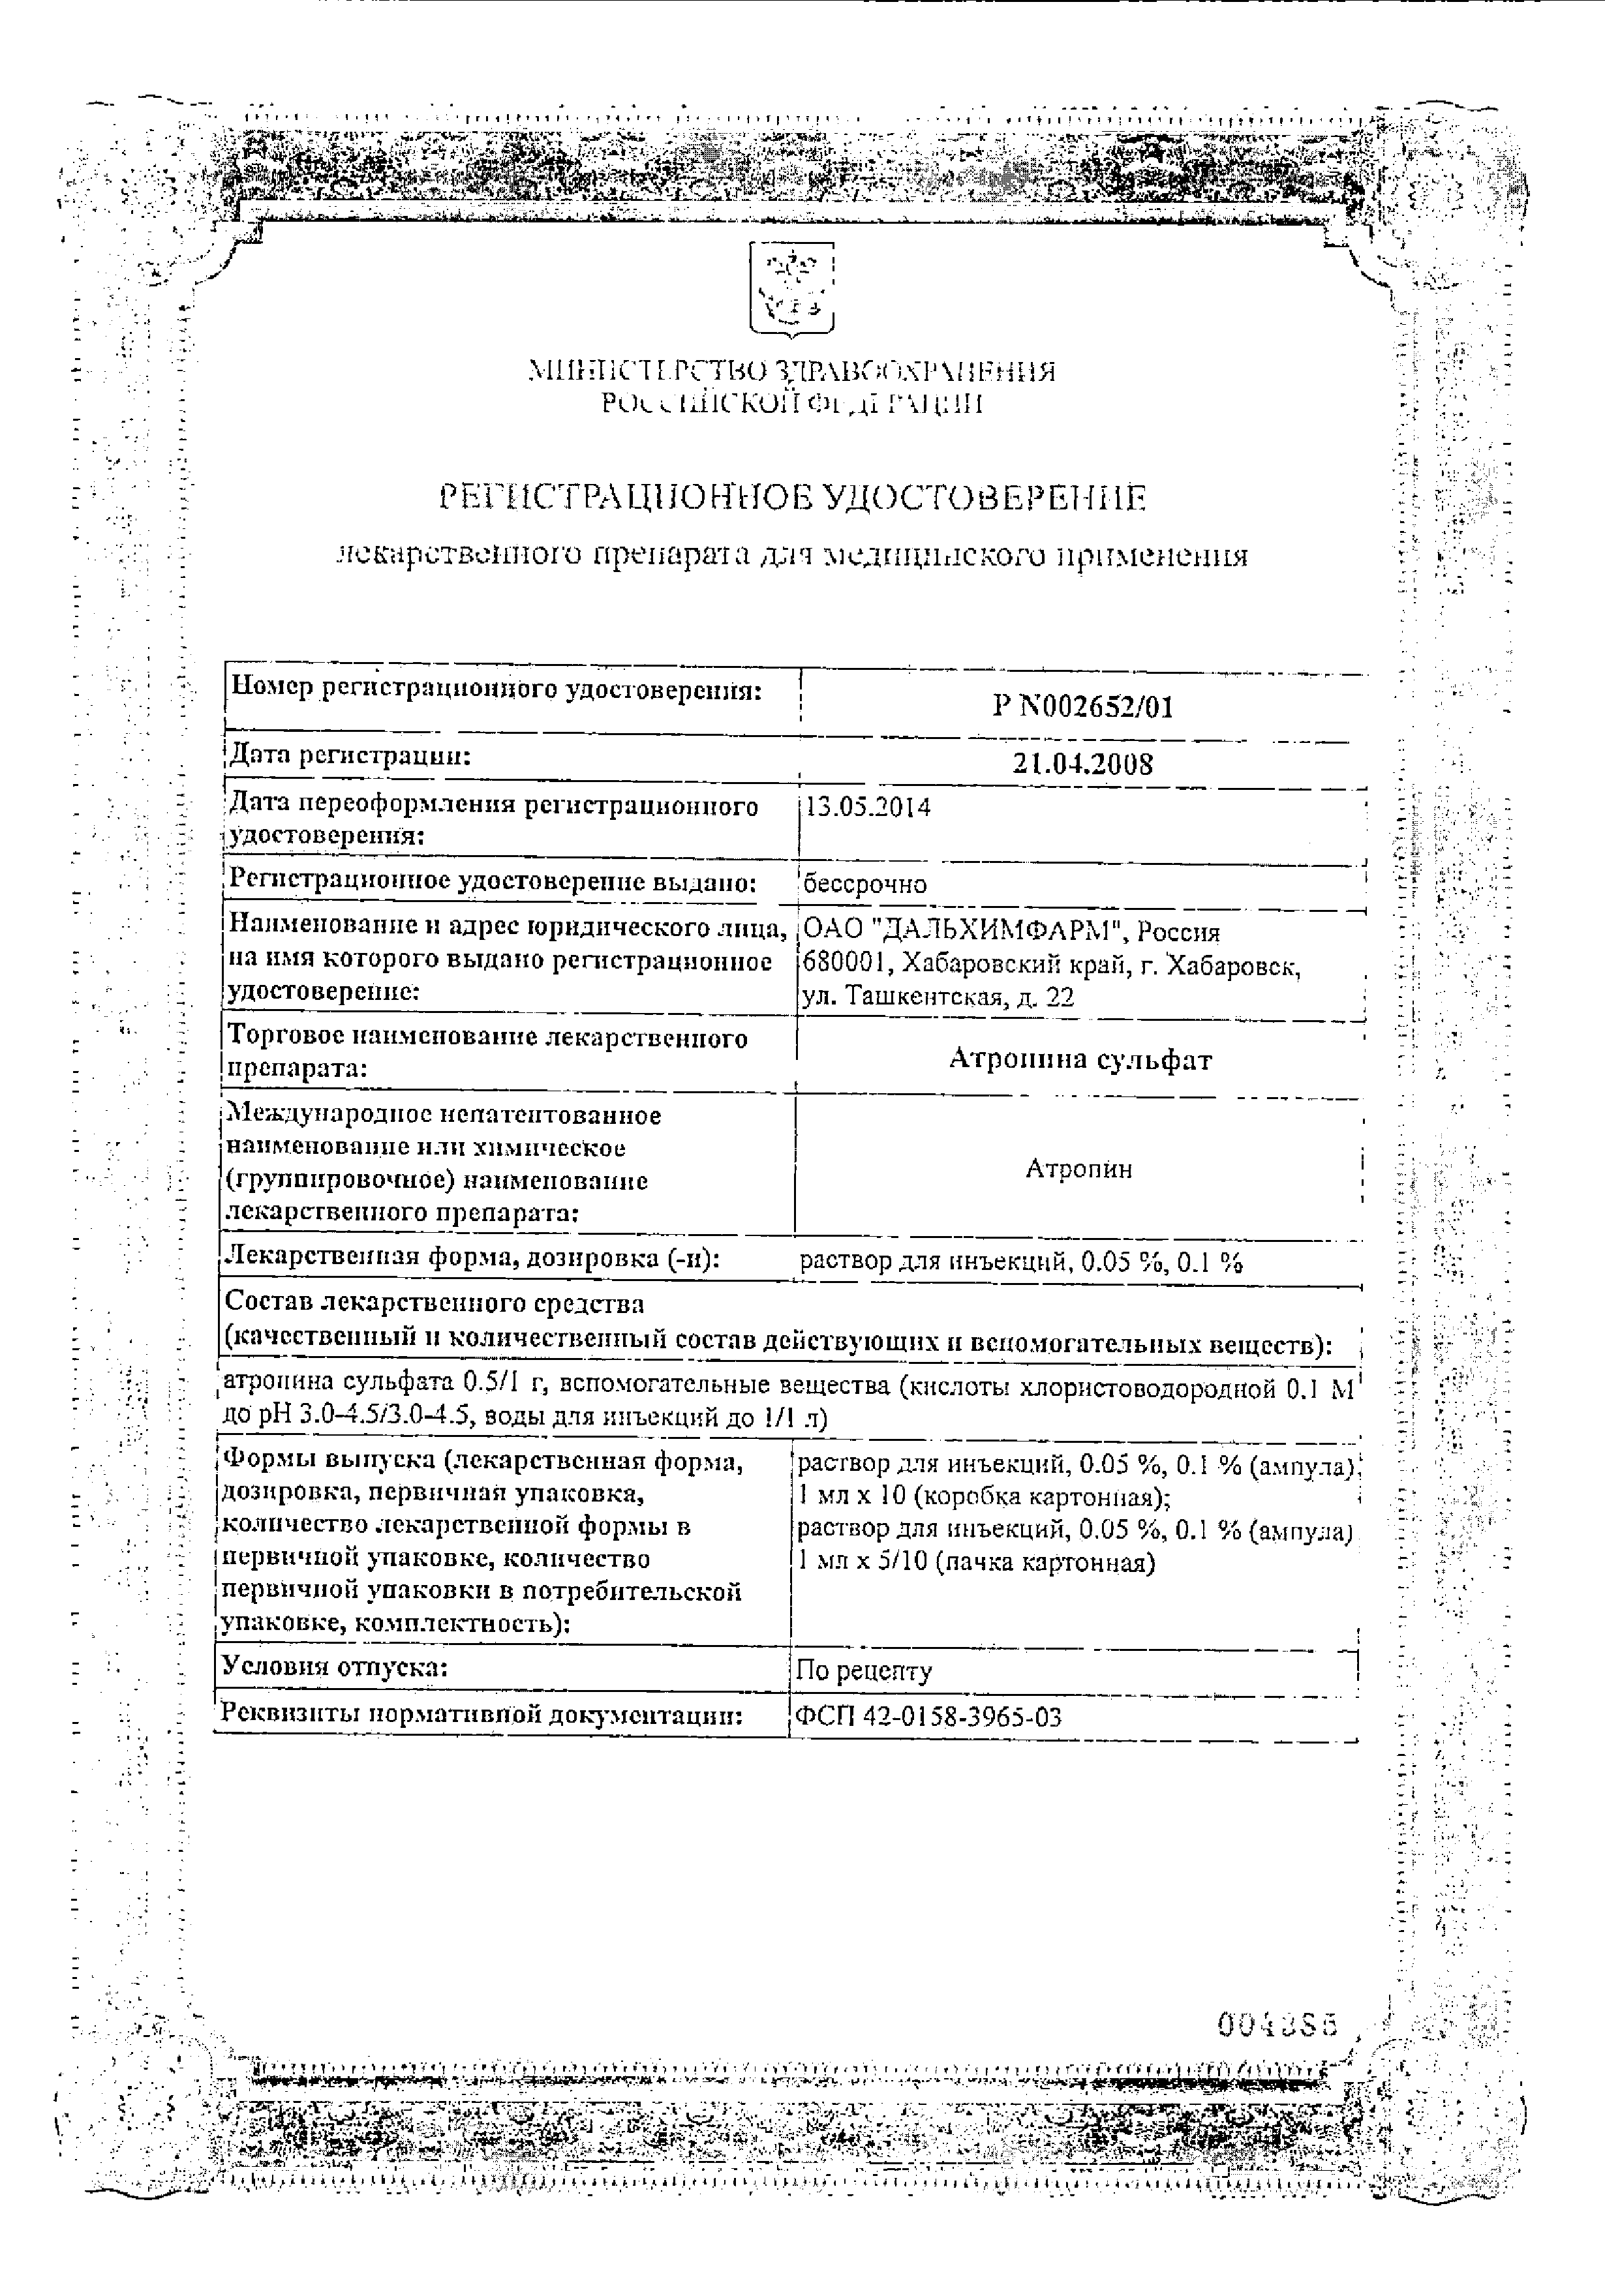 Атропина сульфат сертификат